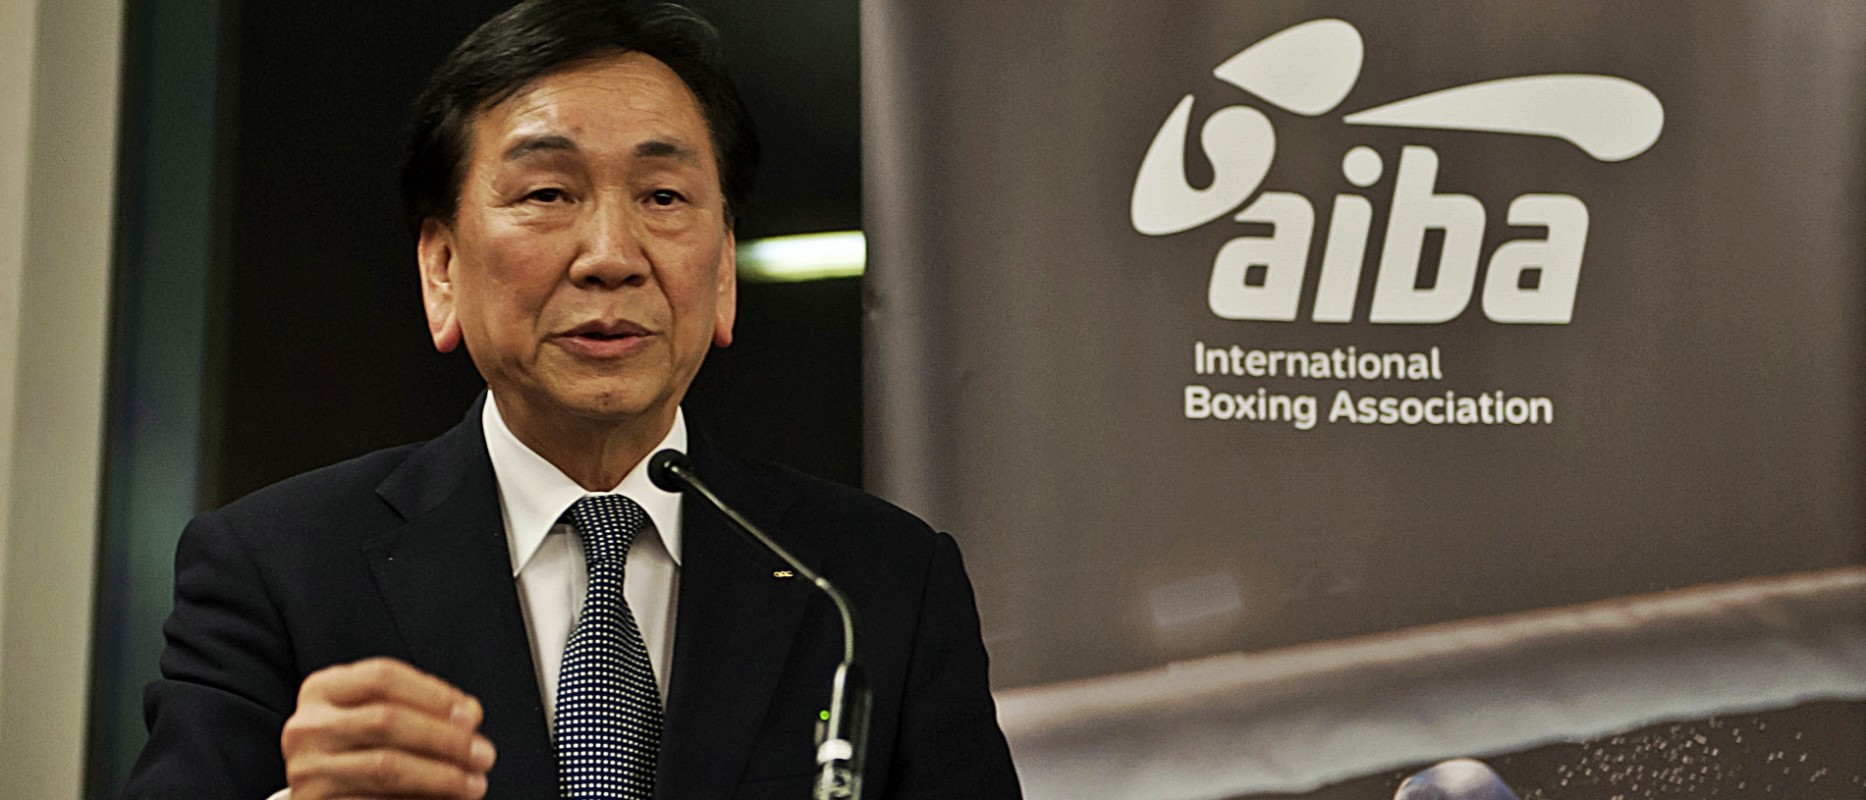 Boxe: Investigado por corrupção, presidente da AIBA renuncia ao cargo